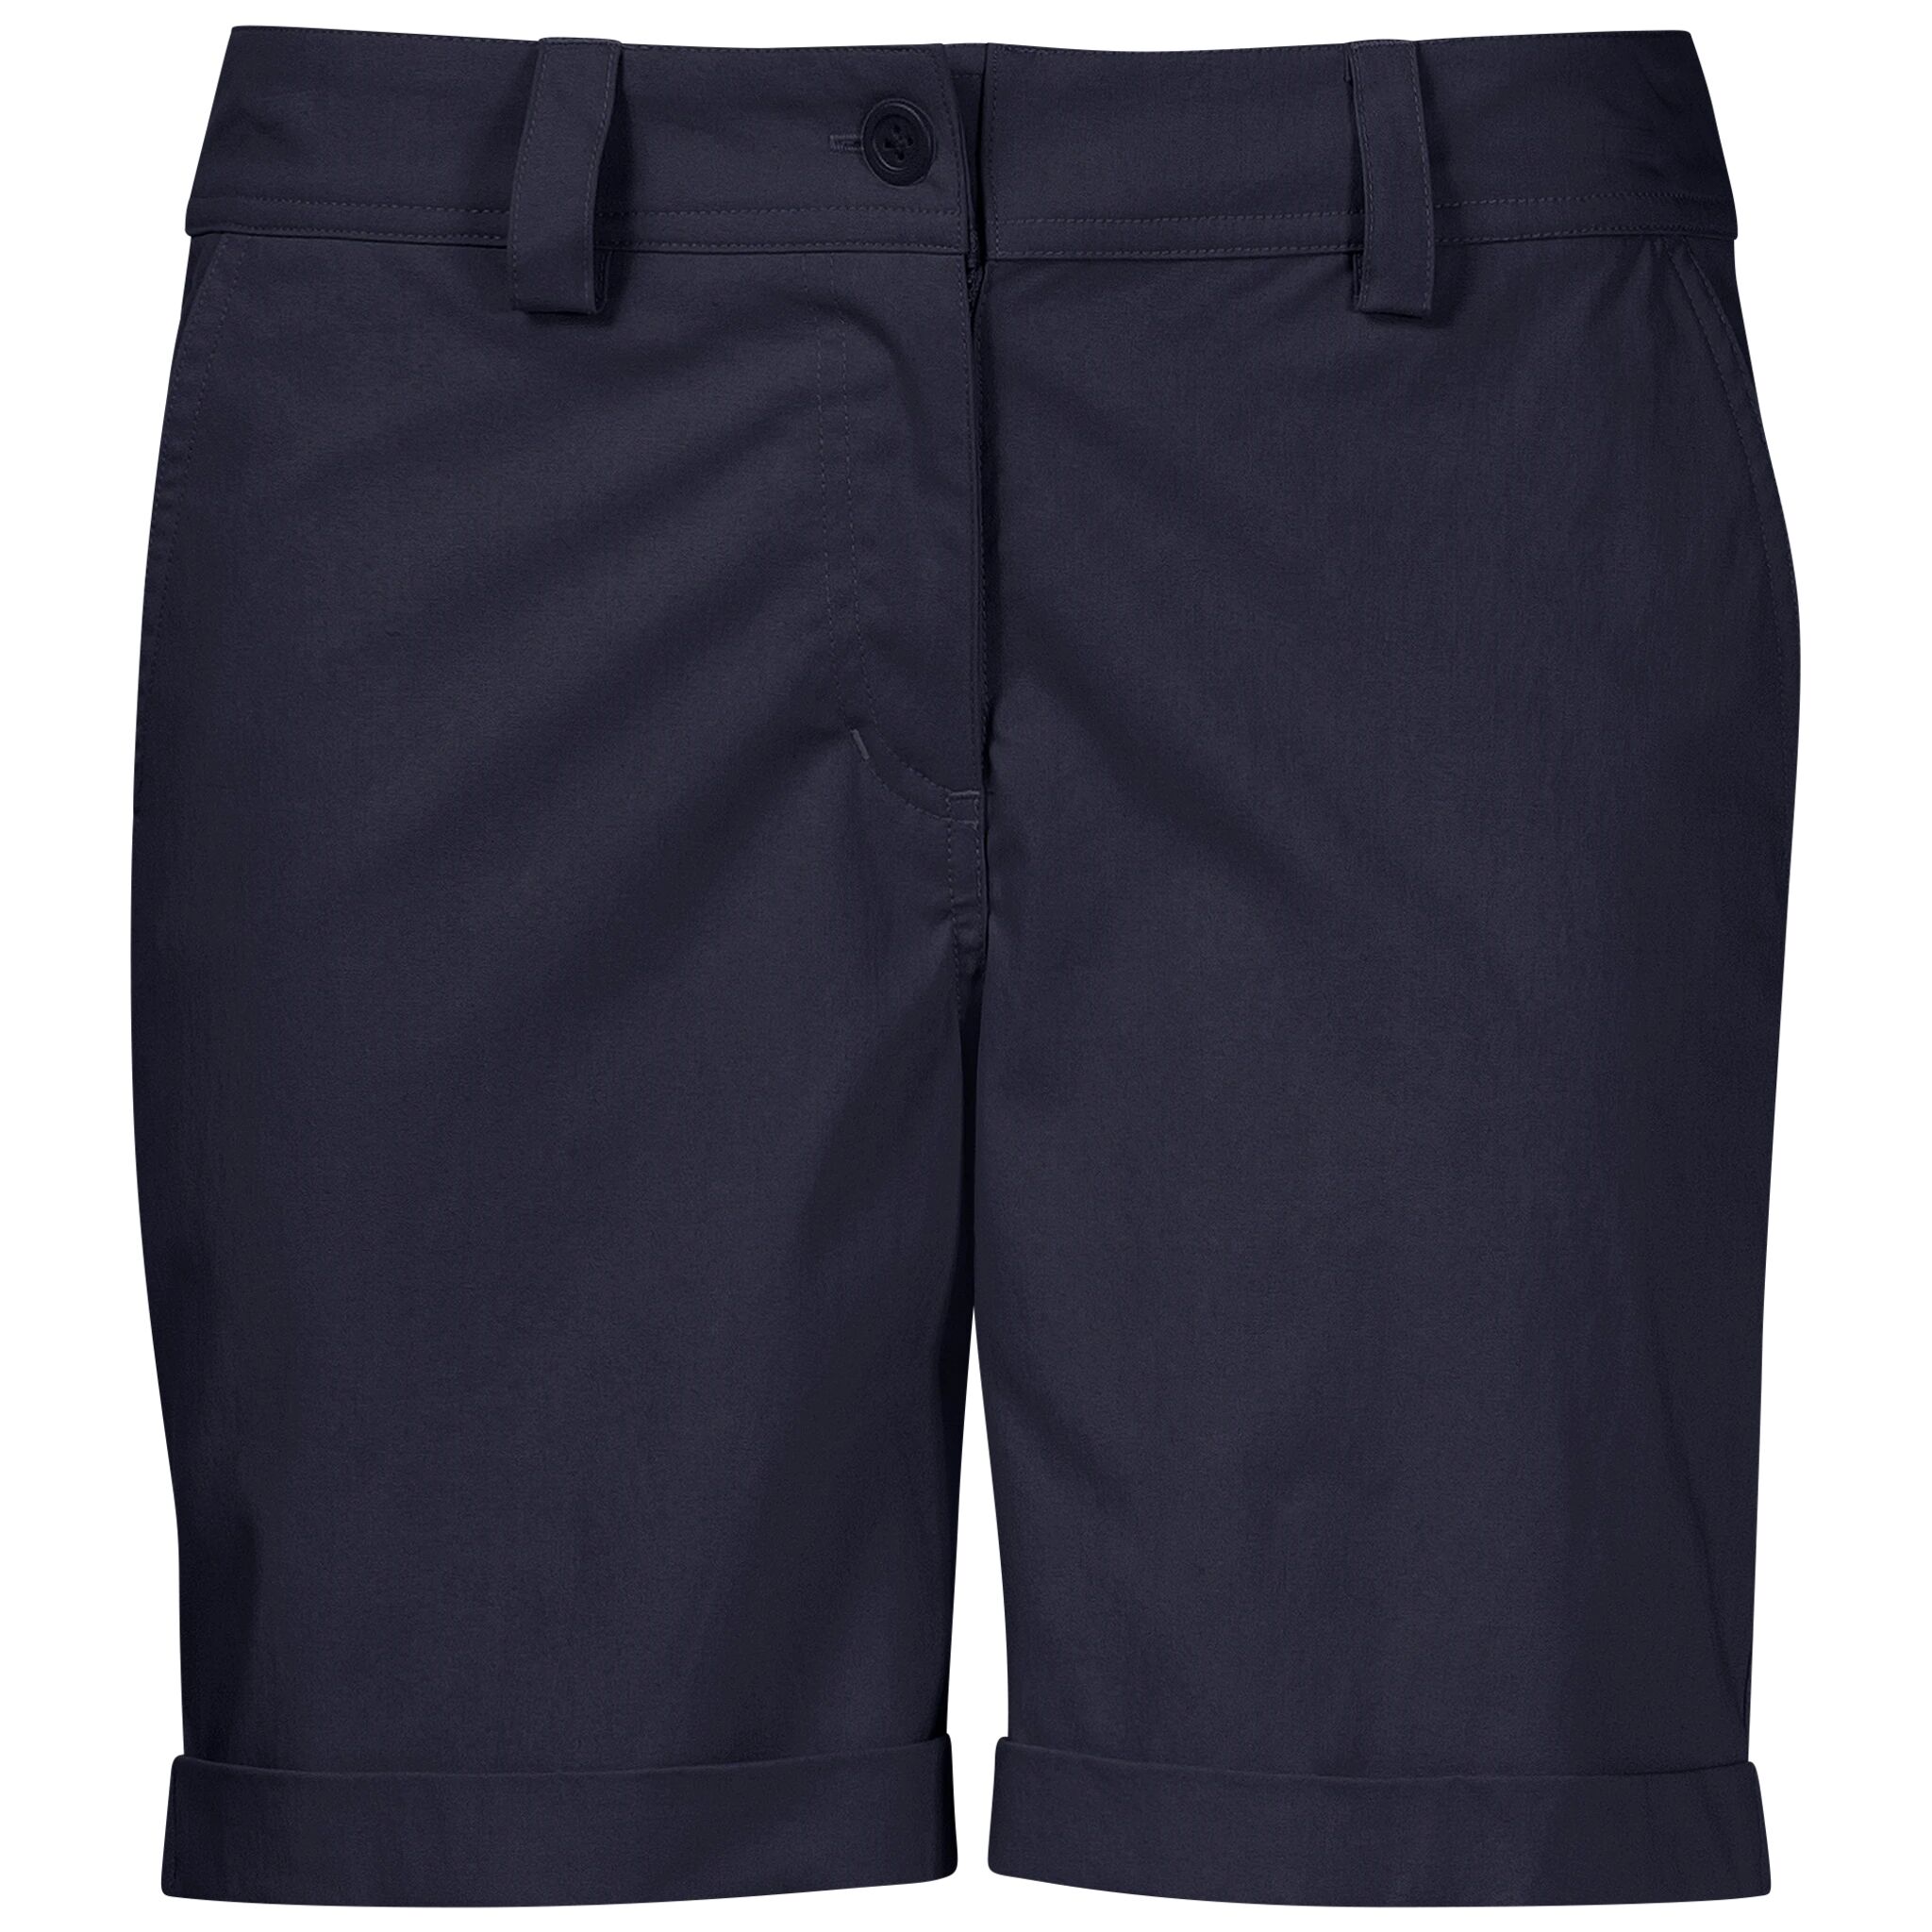 Bergans Oslo Shorts, dame XL Dark Navy